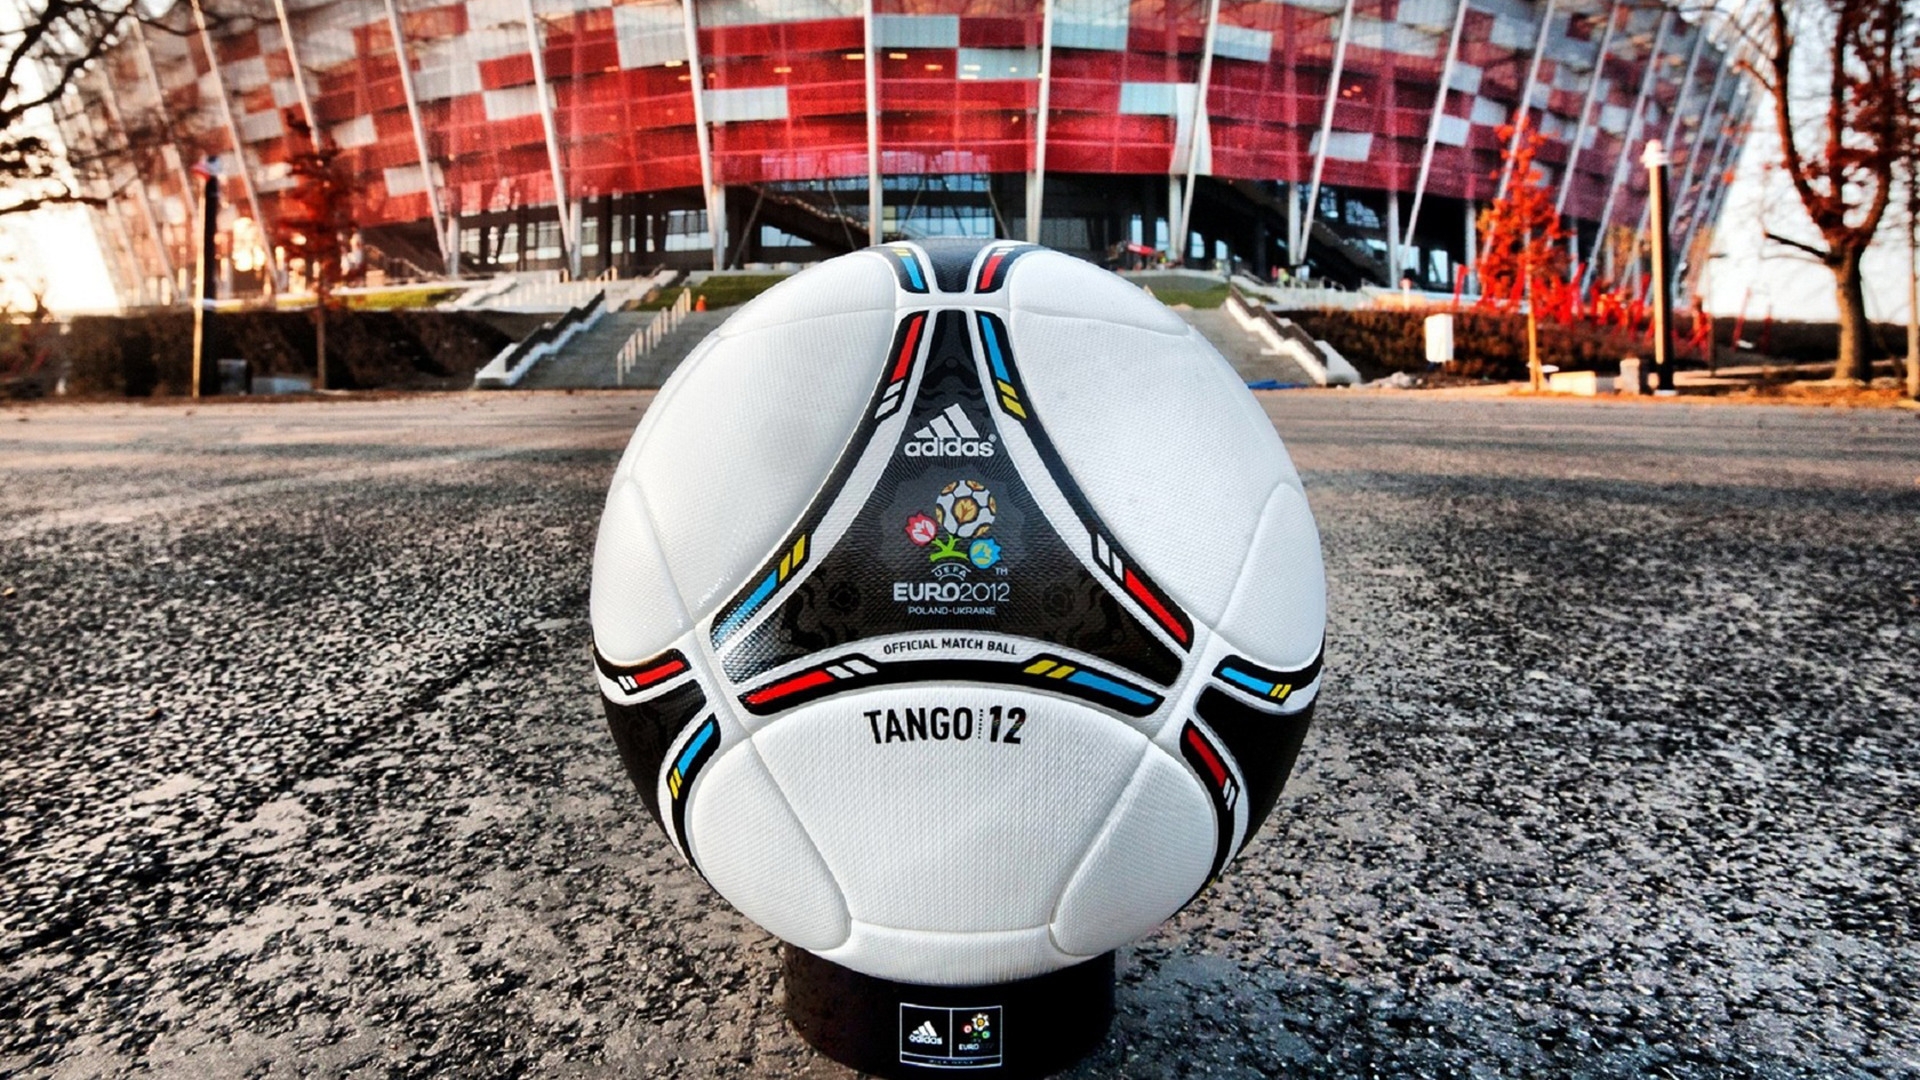 Tango EURO 2012 for 1920 x 1080 HDTV 1080p resolution